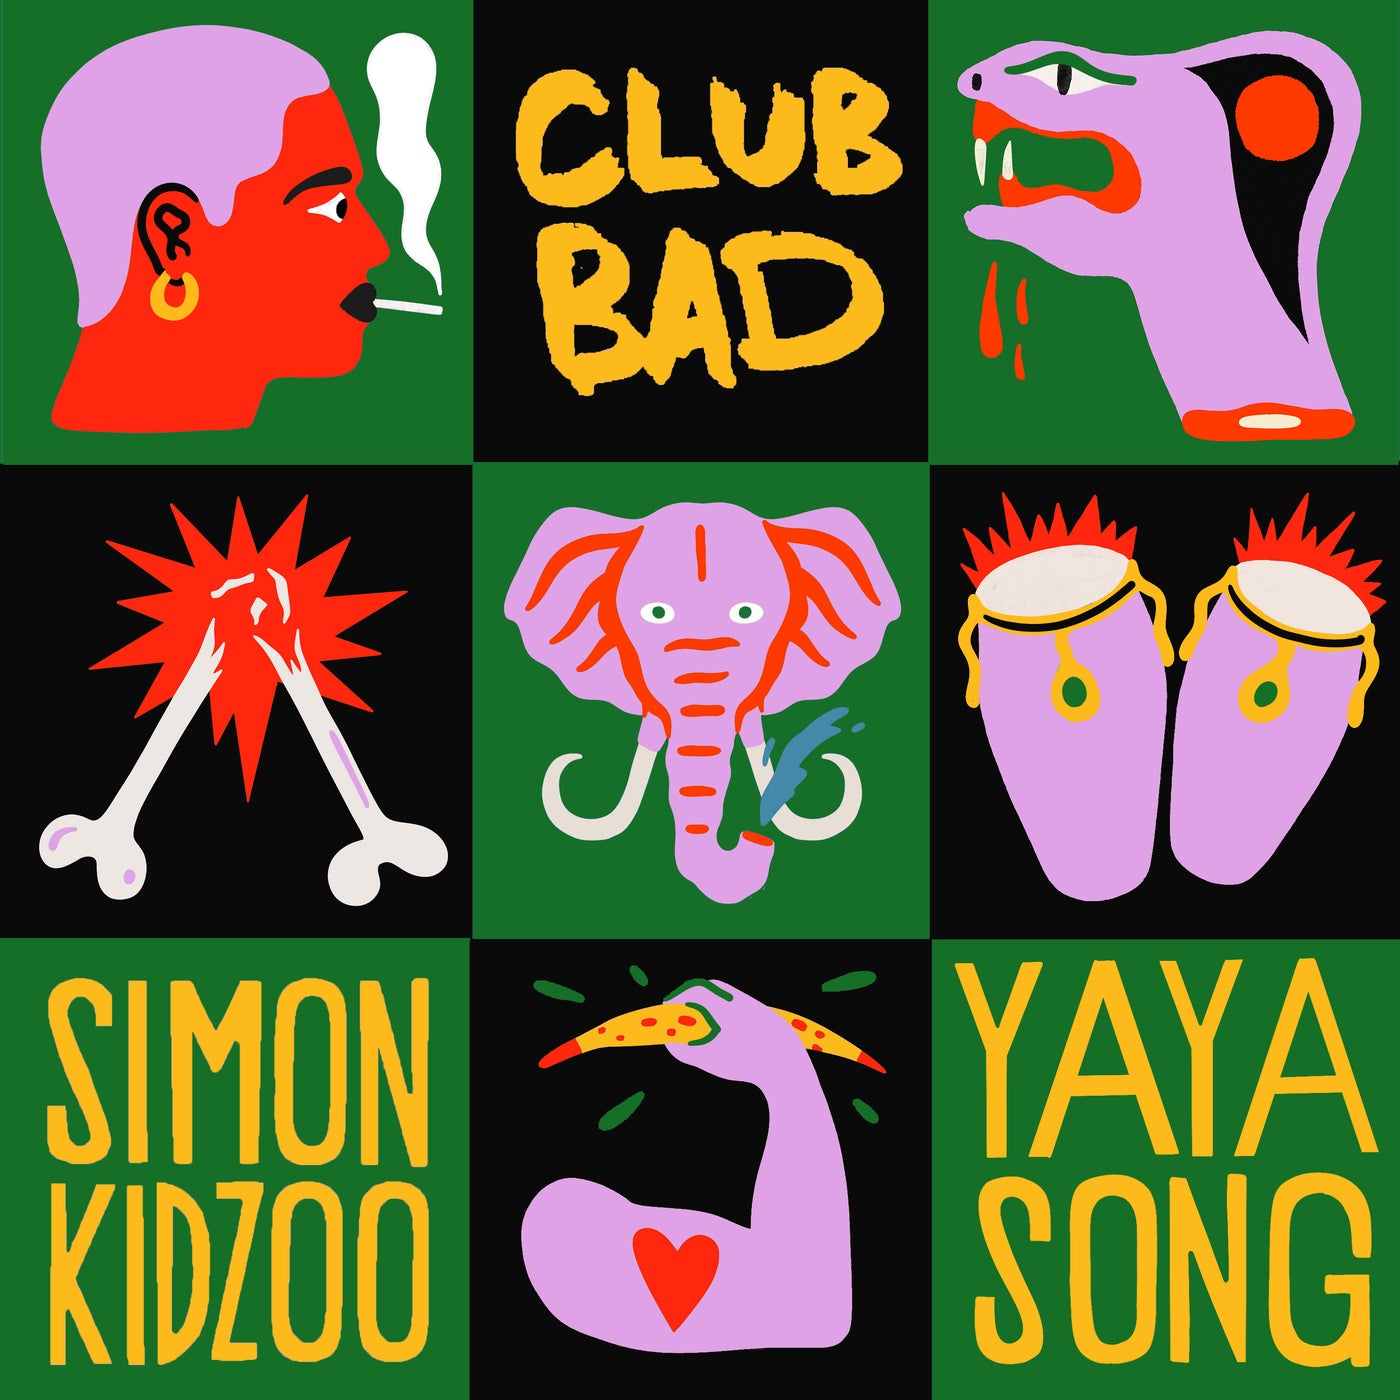 Simon Kidzoo - Yaya Song on Club Bad